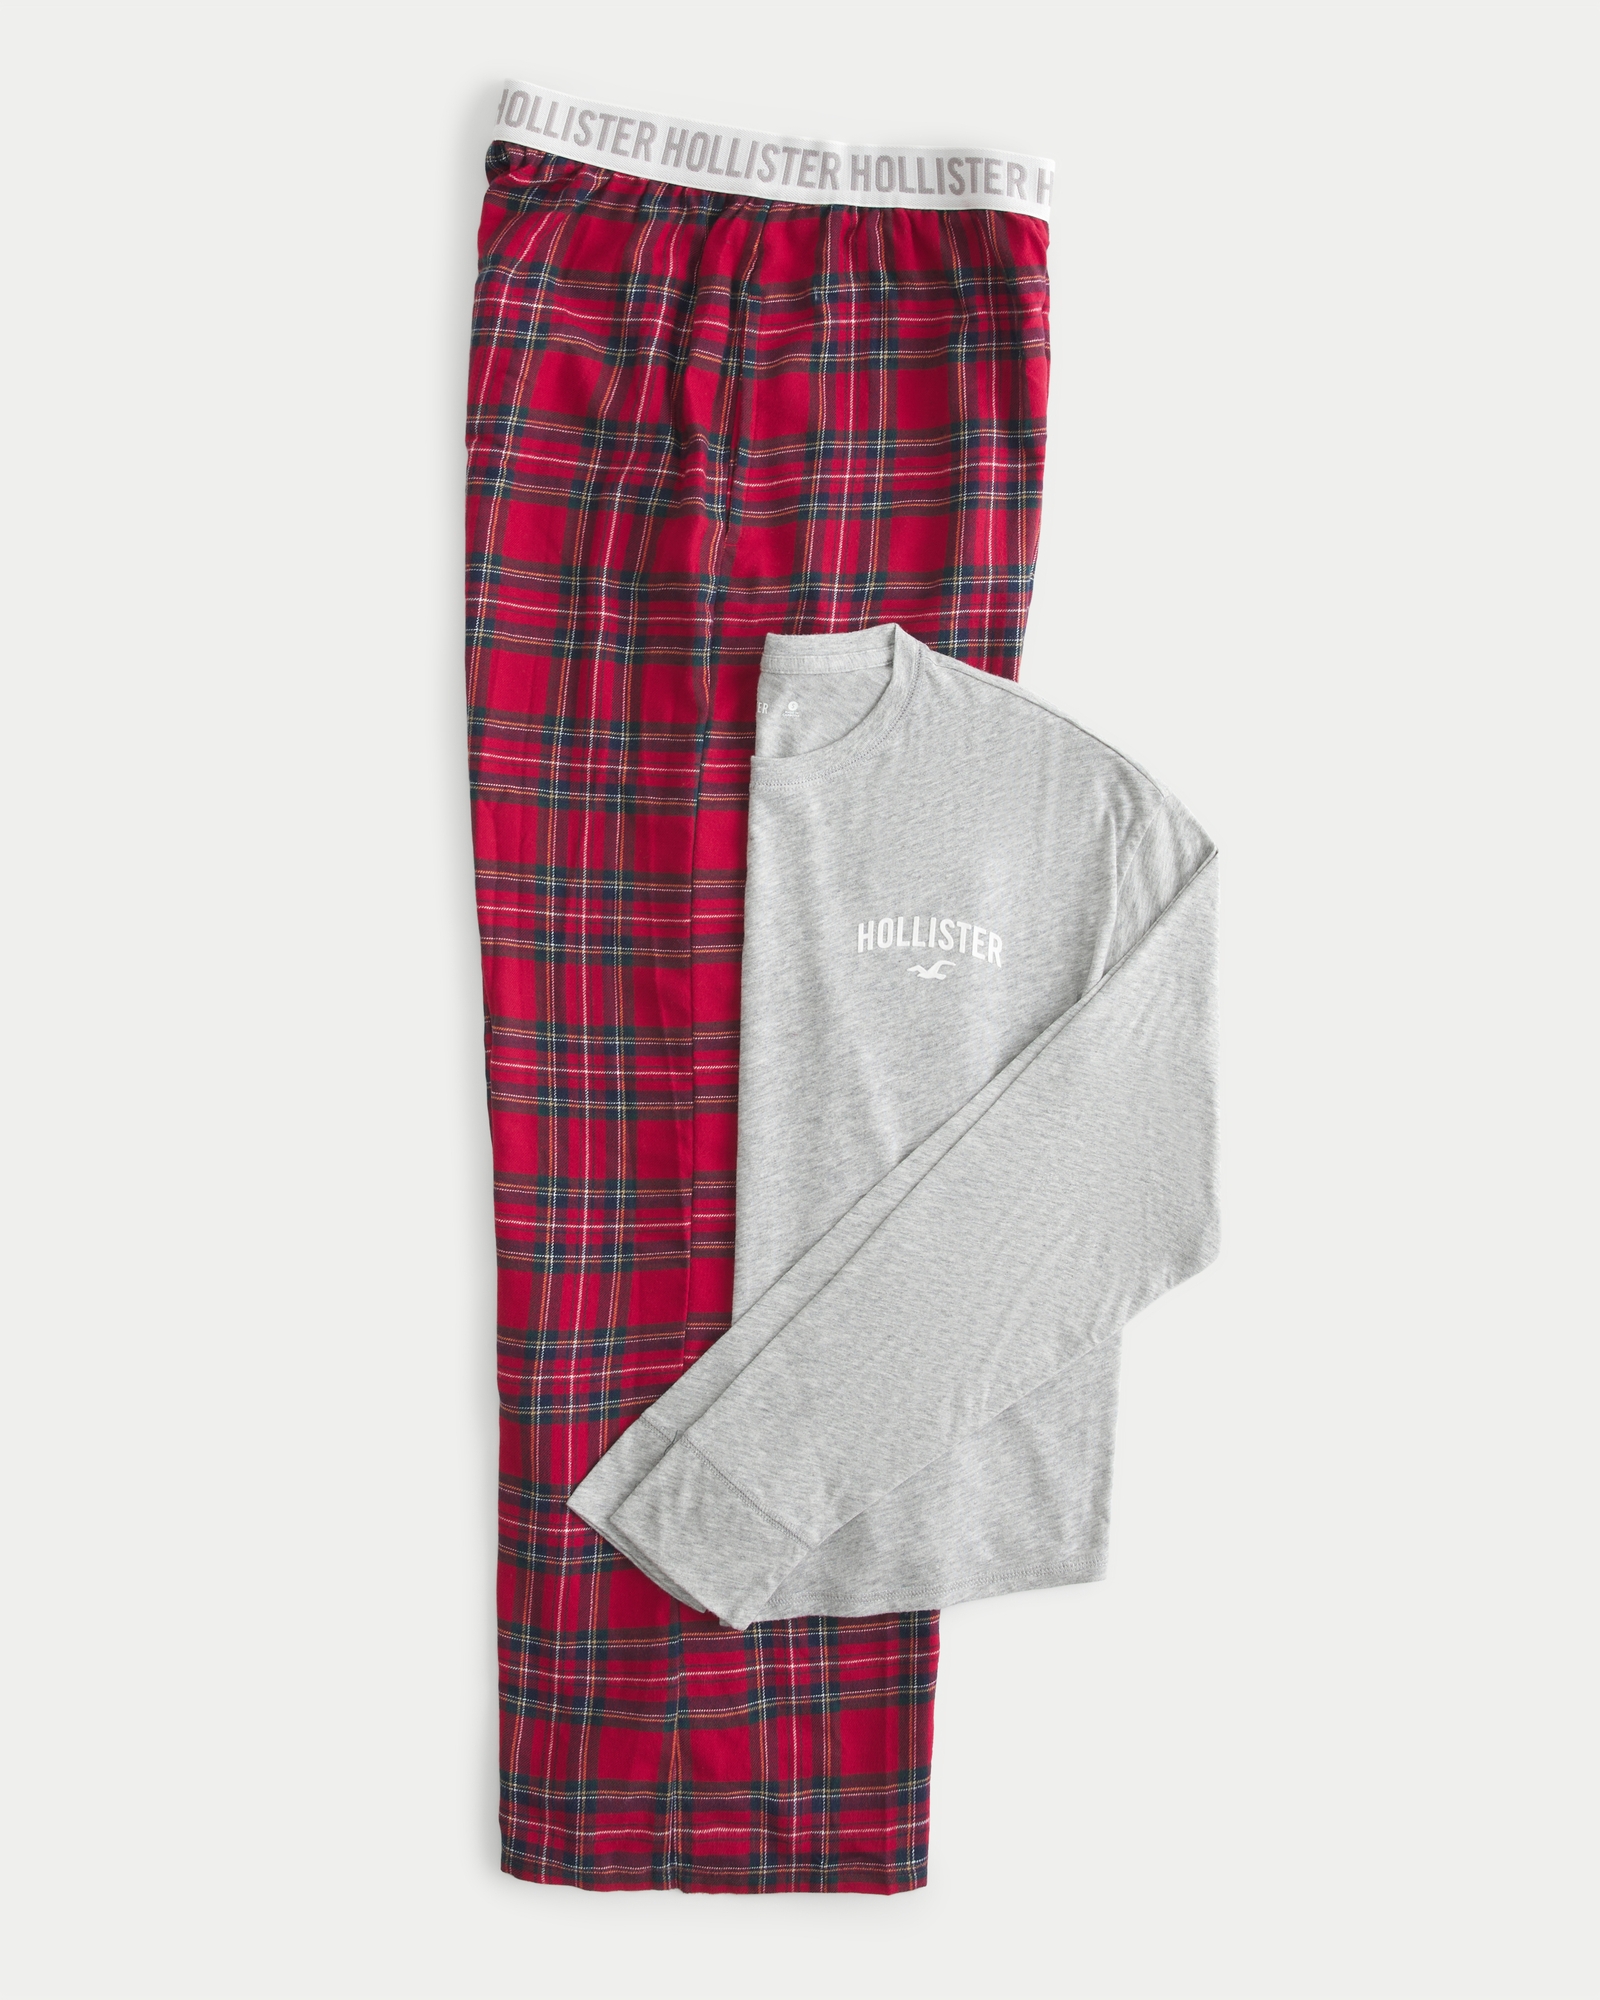 Womens Flannel Pajama Pants-Plaid Lounge Pants, Cotton Blend Pajama Bottoms